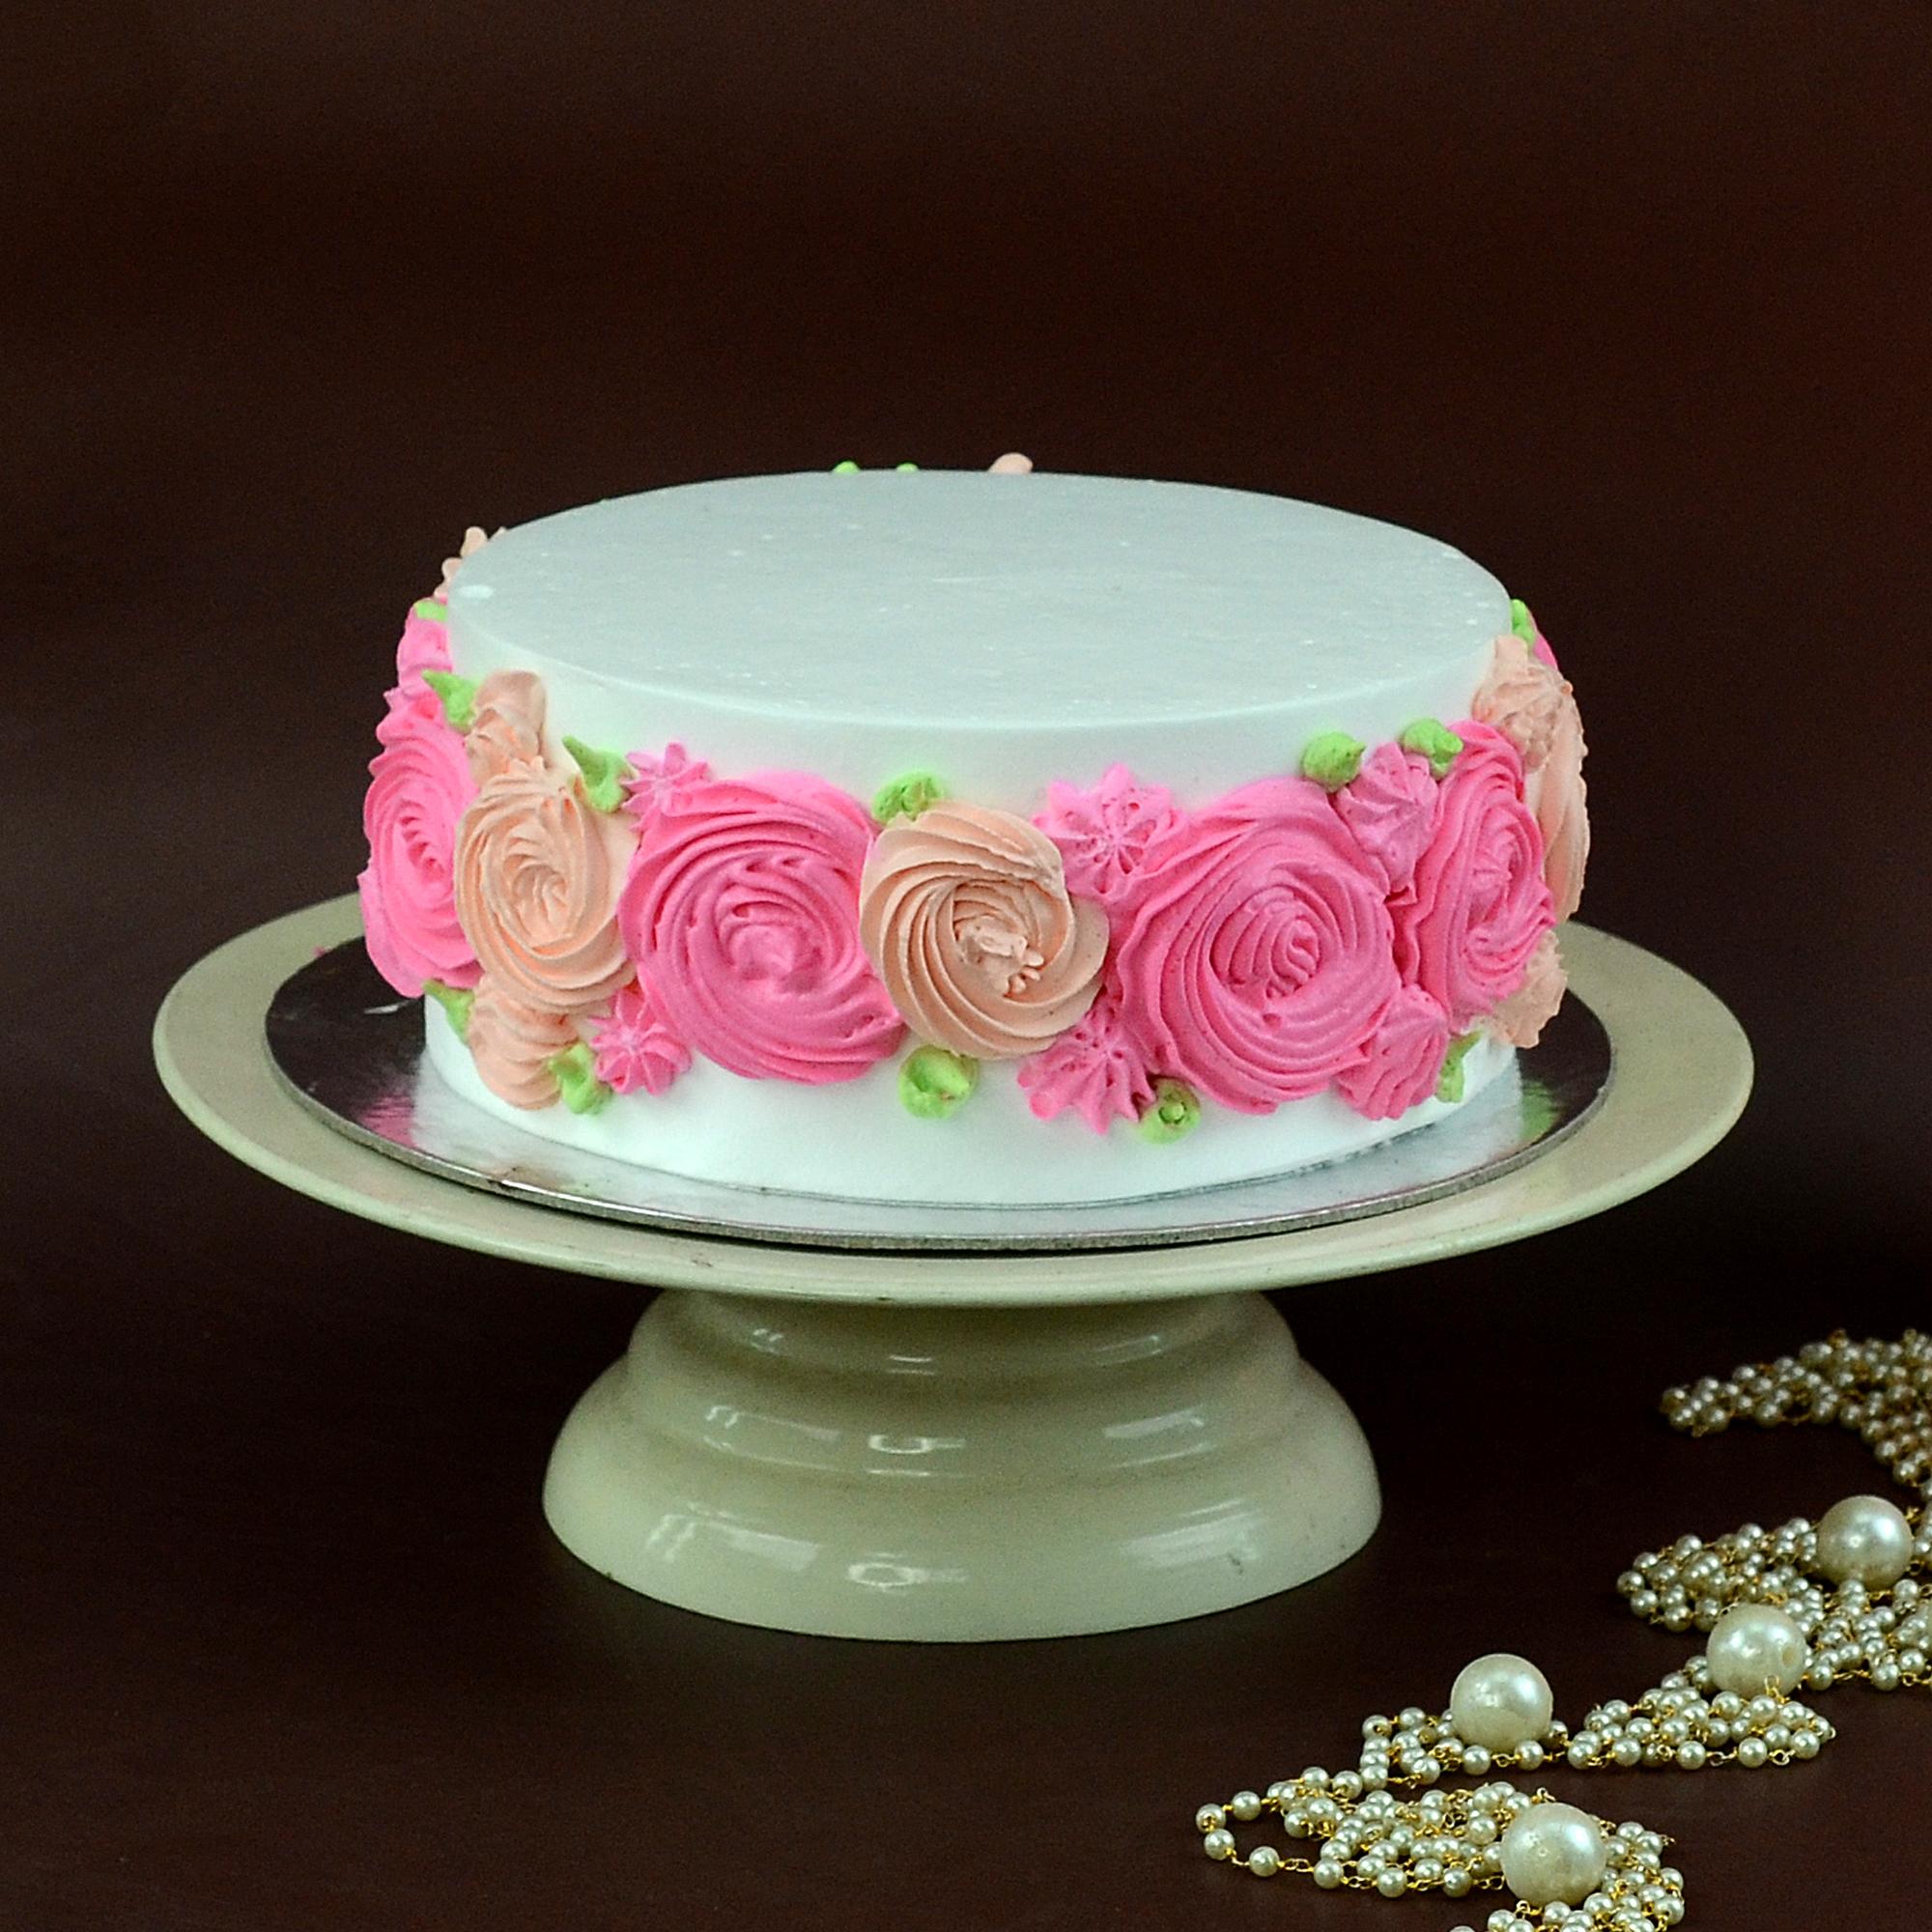 6-inch Vanilla Layer Cake - Sarah's Day Off